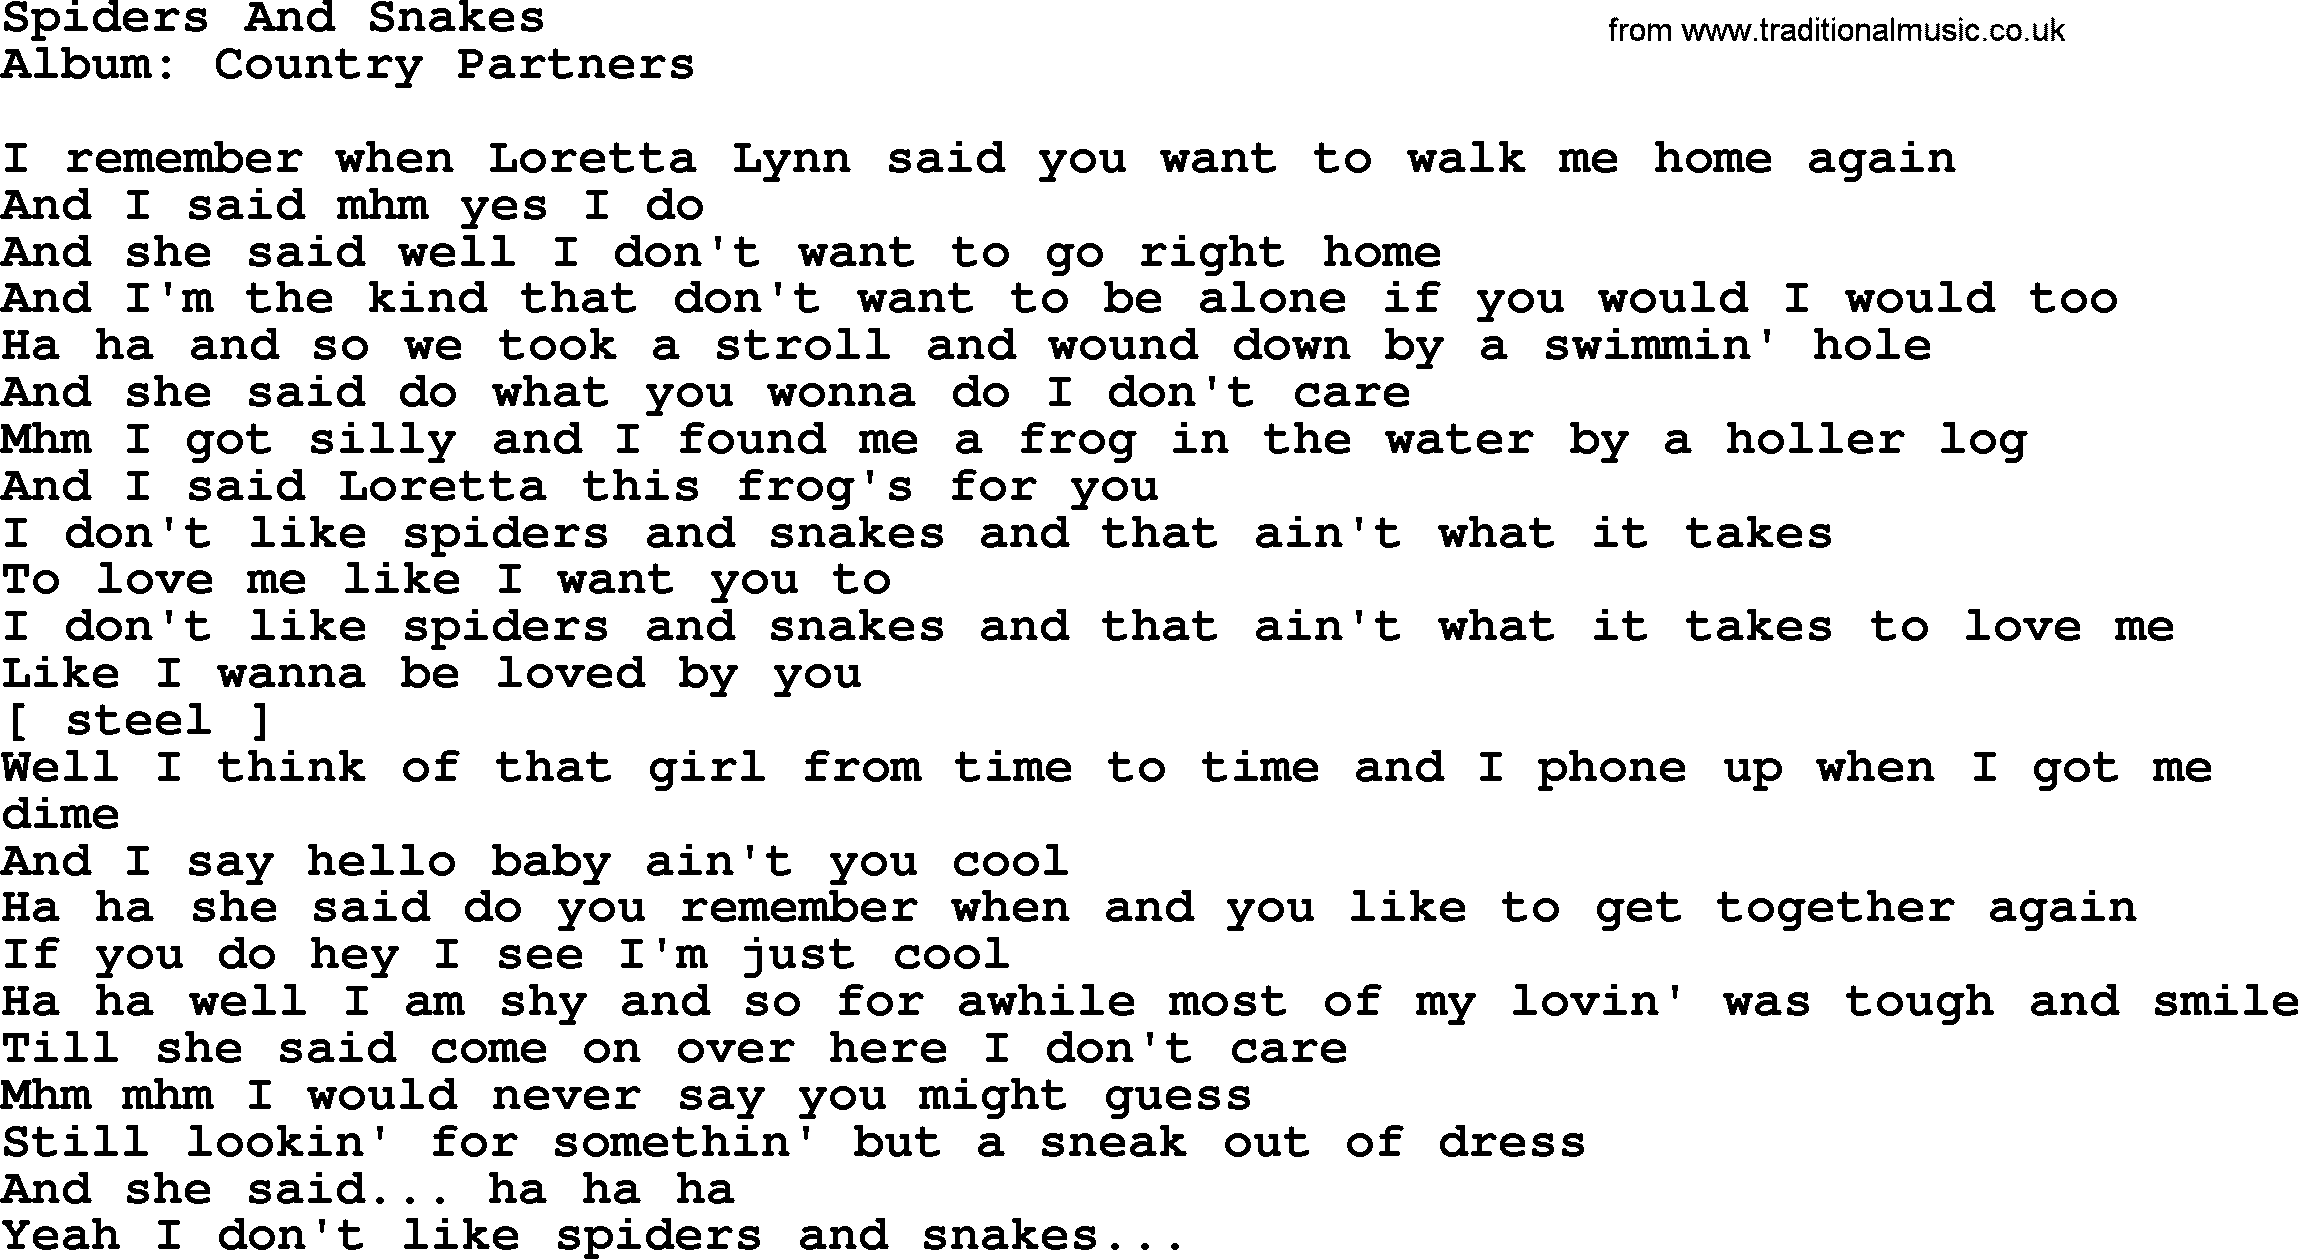 Loretta Lynn song: Spiders And Snakes lyrics